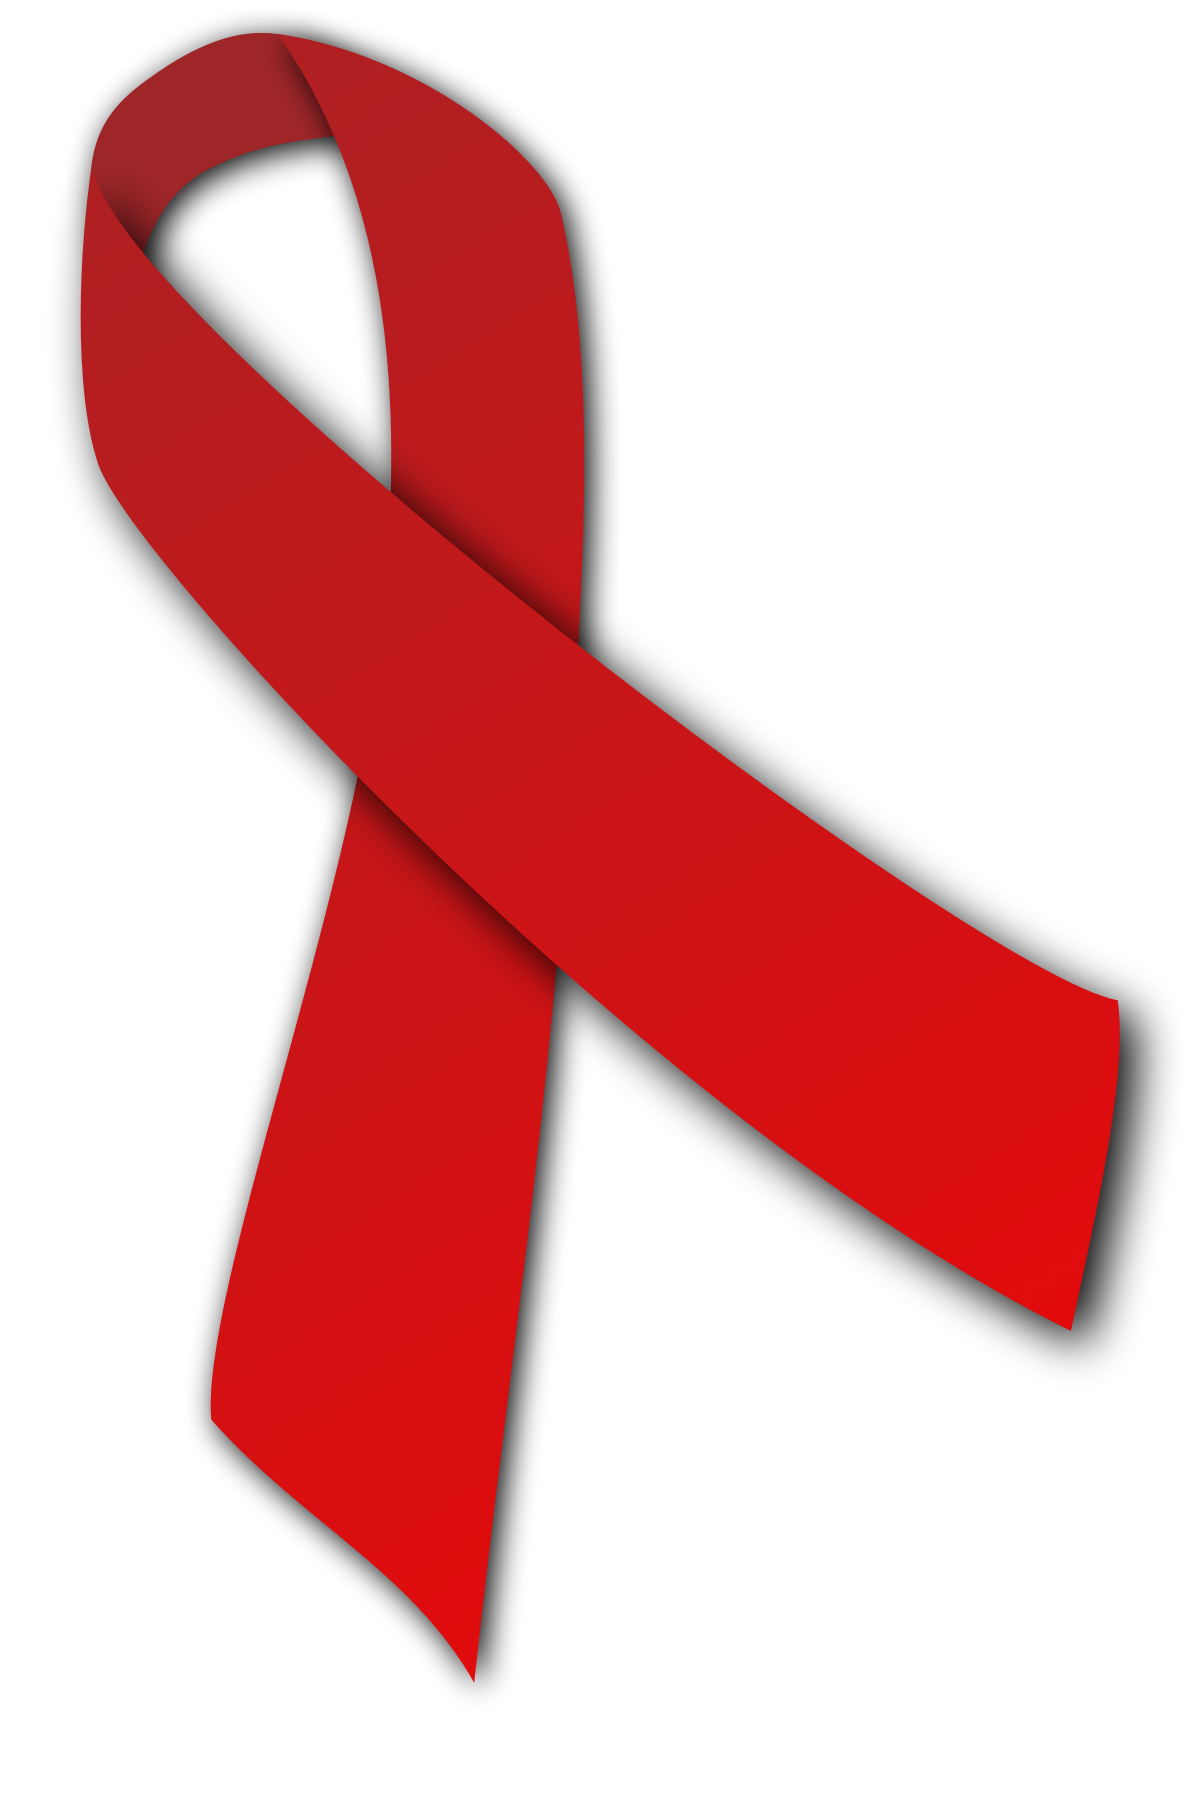 hiv/aids - wikipedia